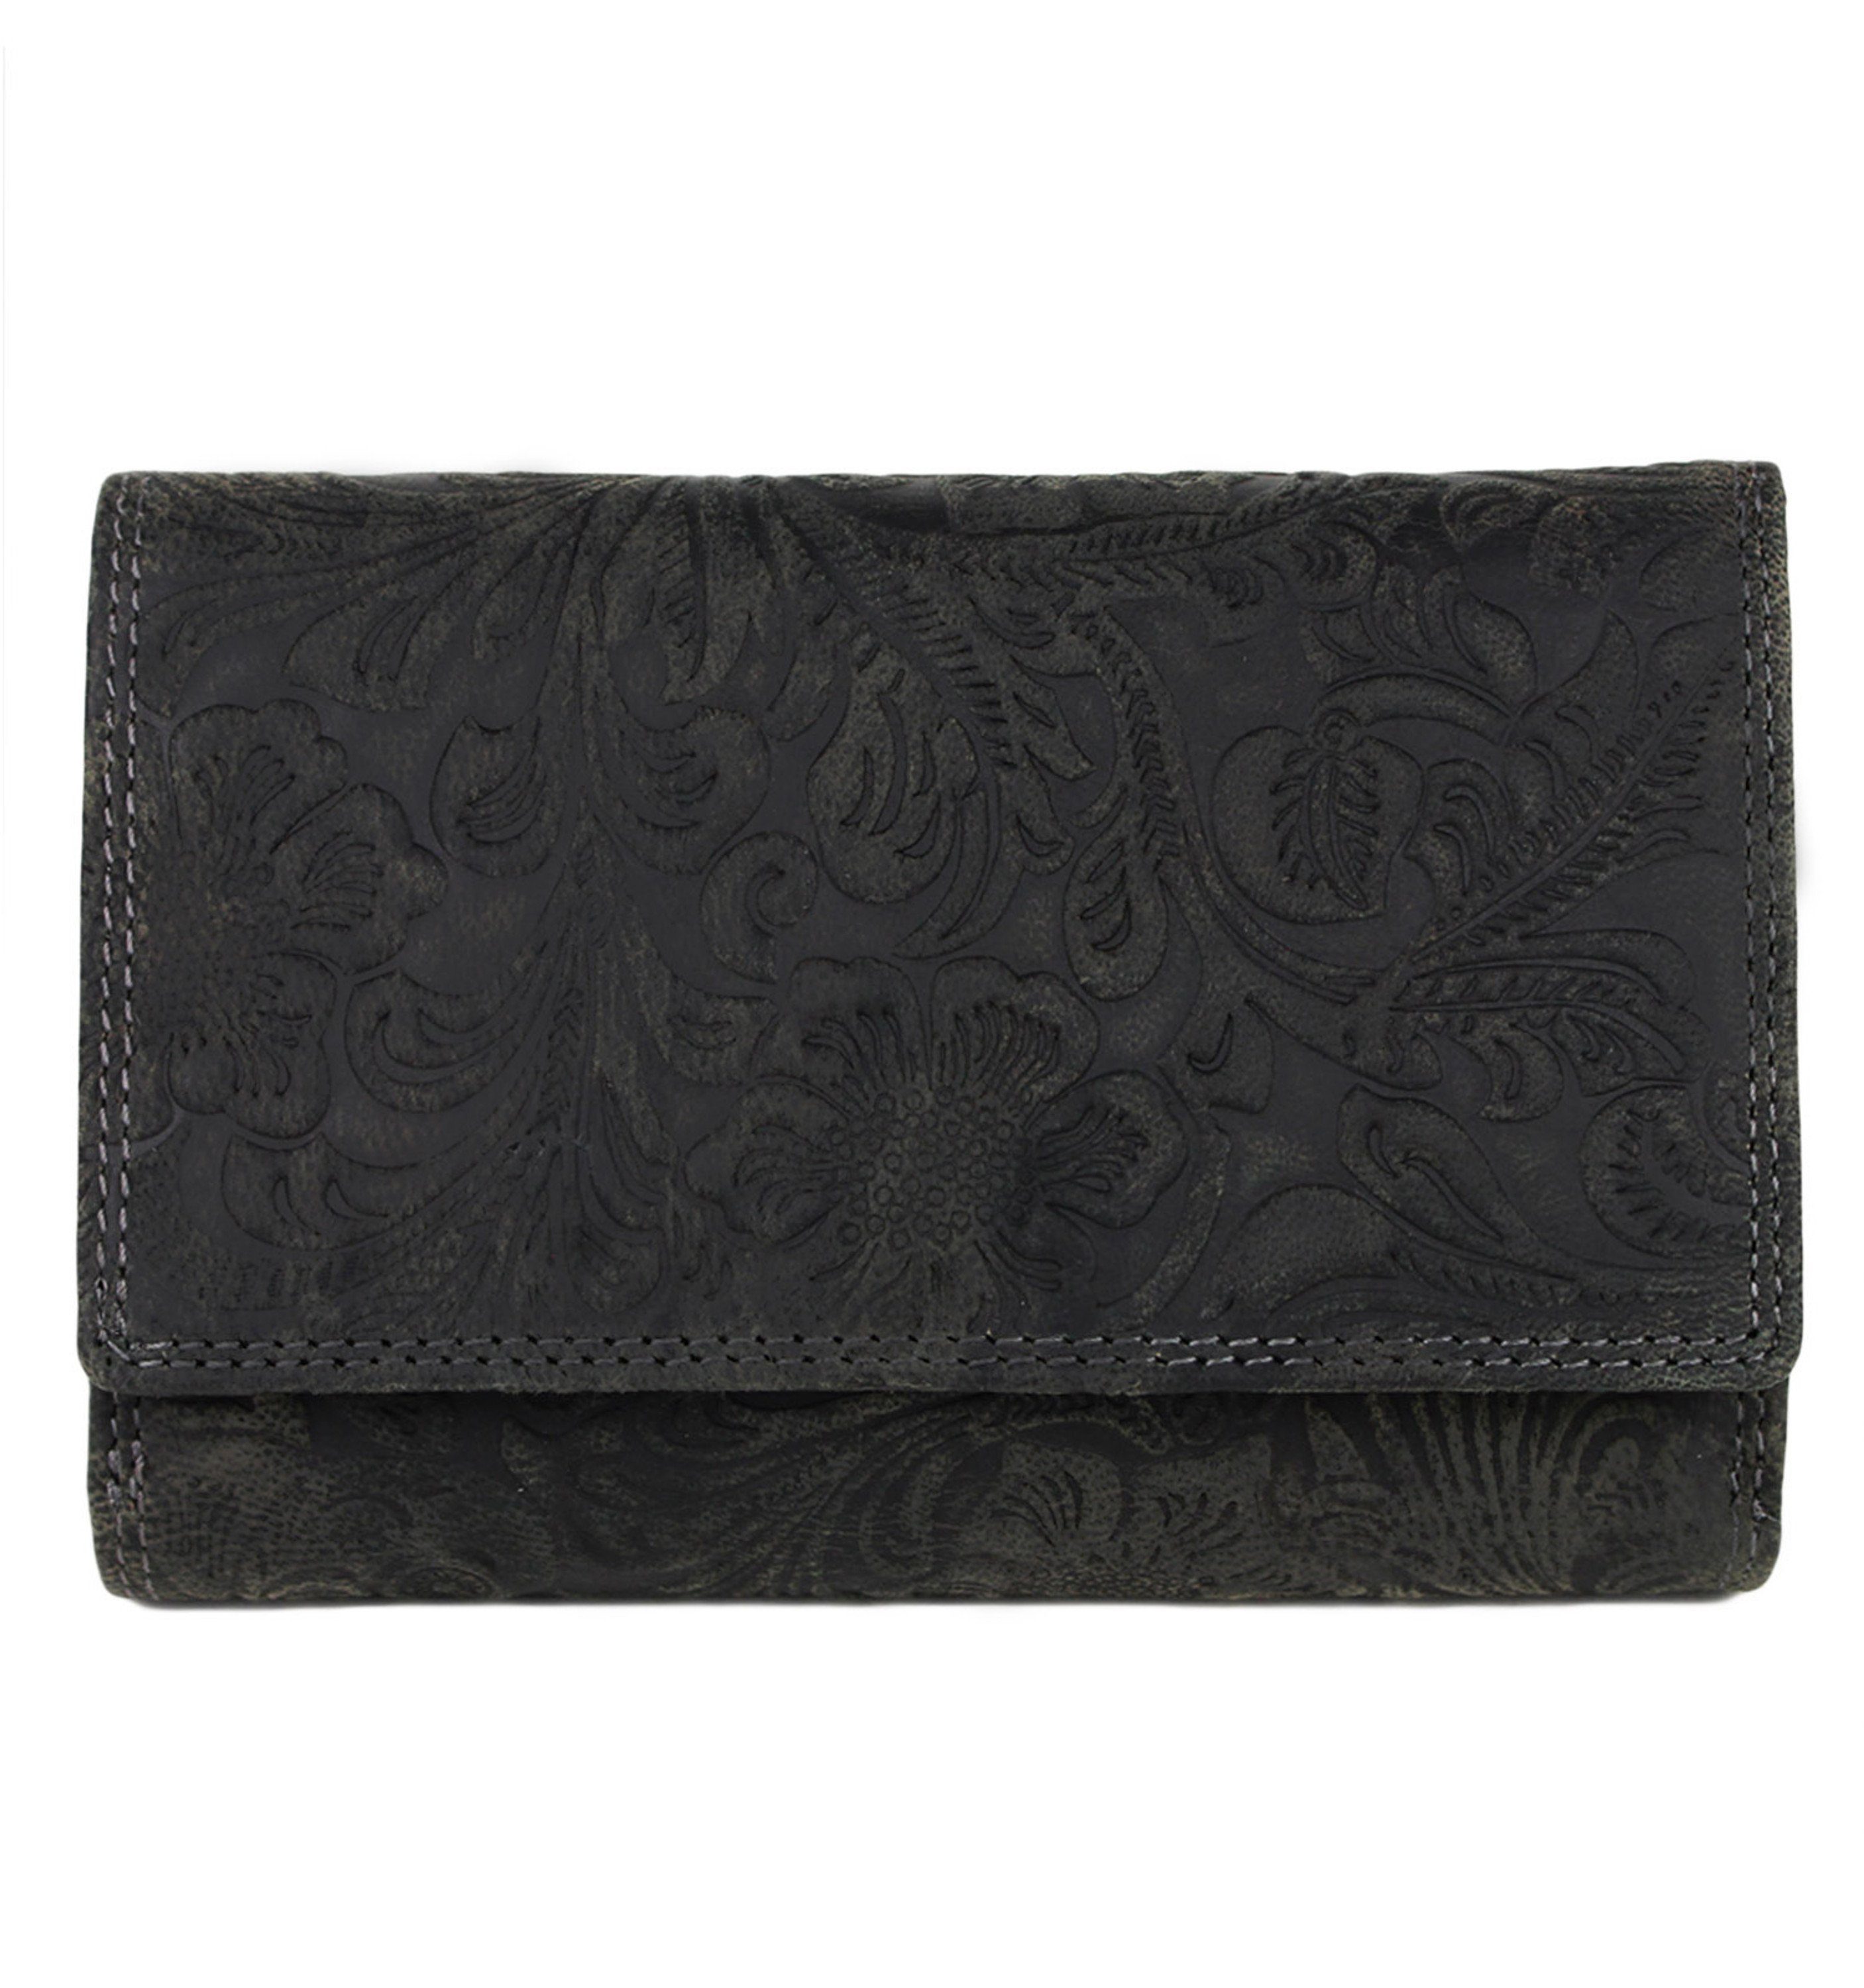 Schompi Geldbörse Leder Portemonnaie Elegant mit geprägtem Blumen Paisley Muster, Damenbörse Lederbörse Querformat Kompakt Mittelgroß RFID Schutz